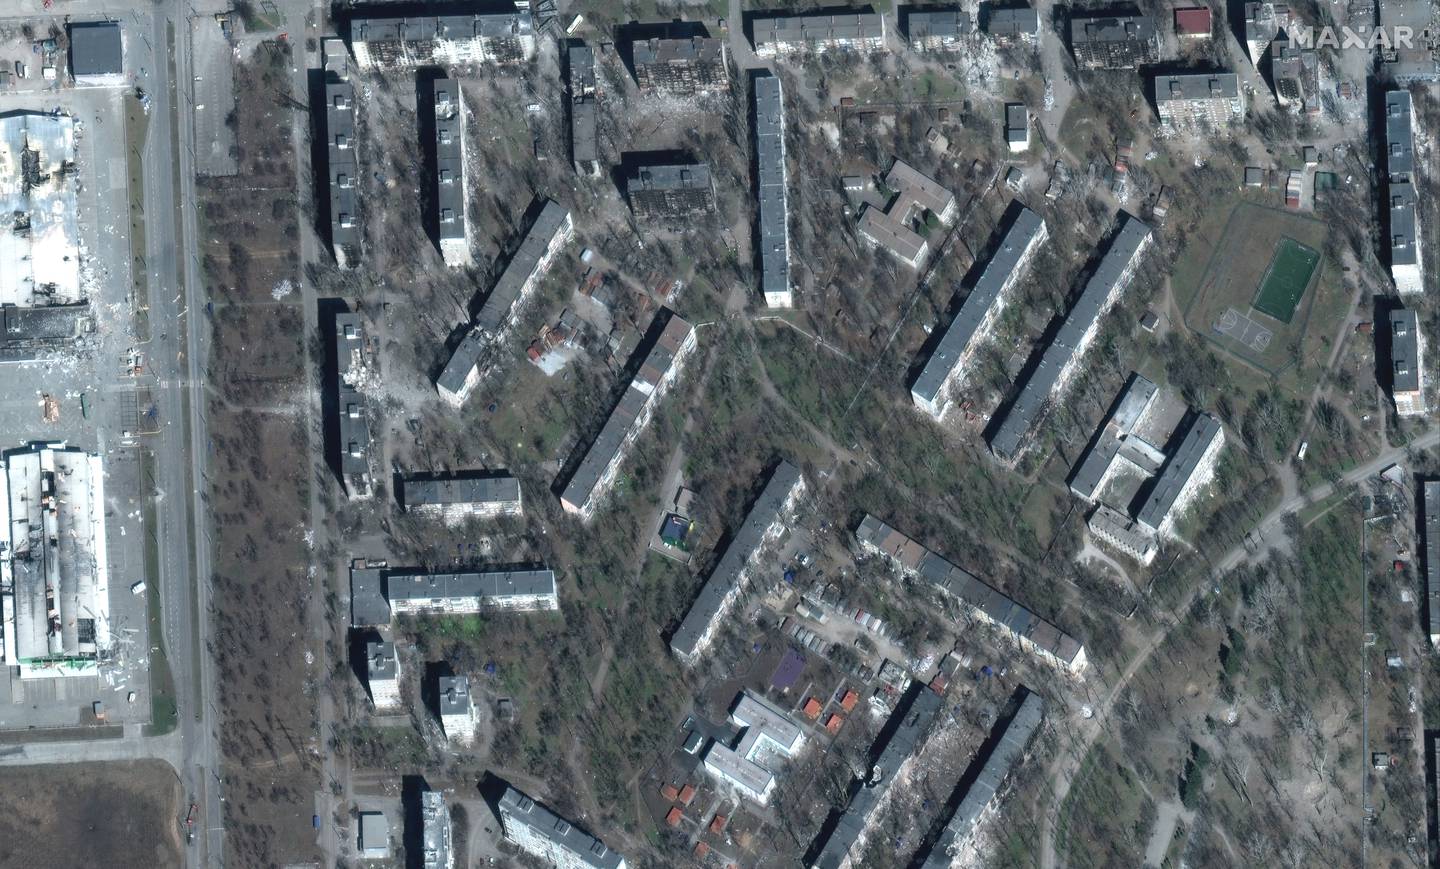 Satellite image shows destroyed buildings near Kuprina Street, Mariupol, Ukraine, March 29, 2022.